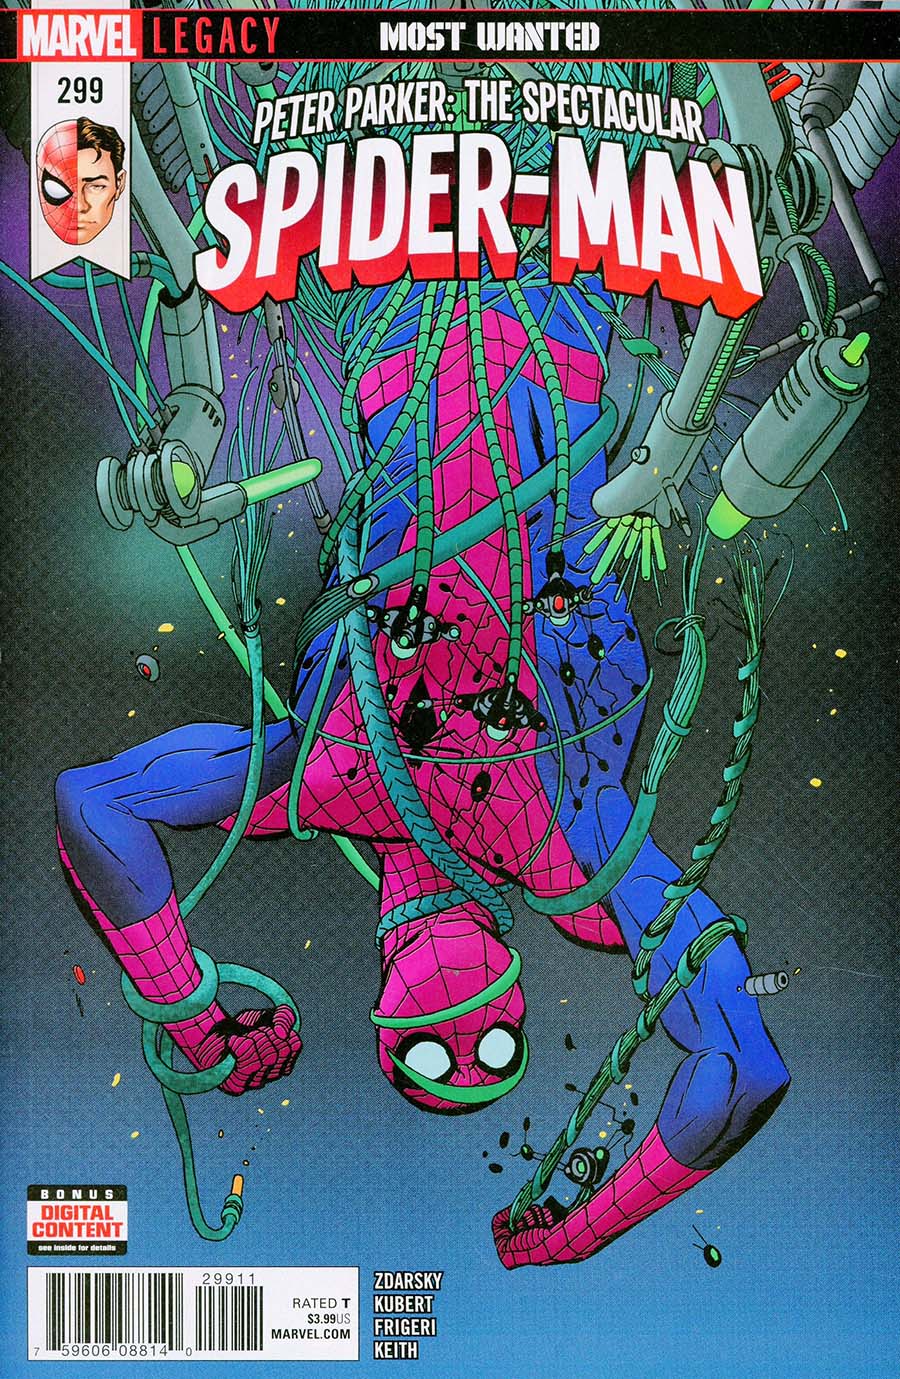 Peter Parker Spectacular Spider-Man #299 (Marvel Legacy Tie-In)